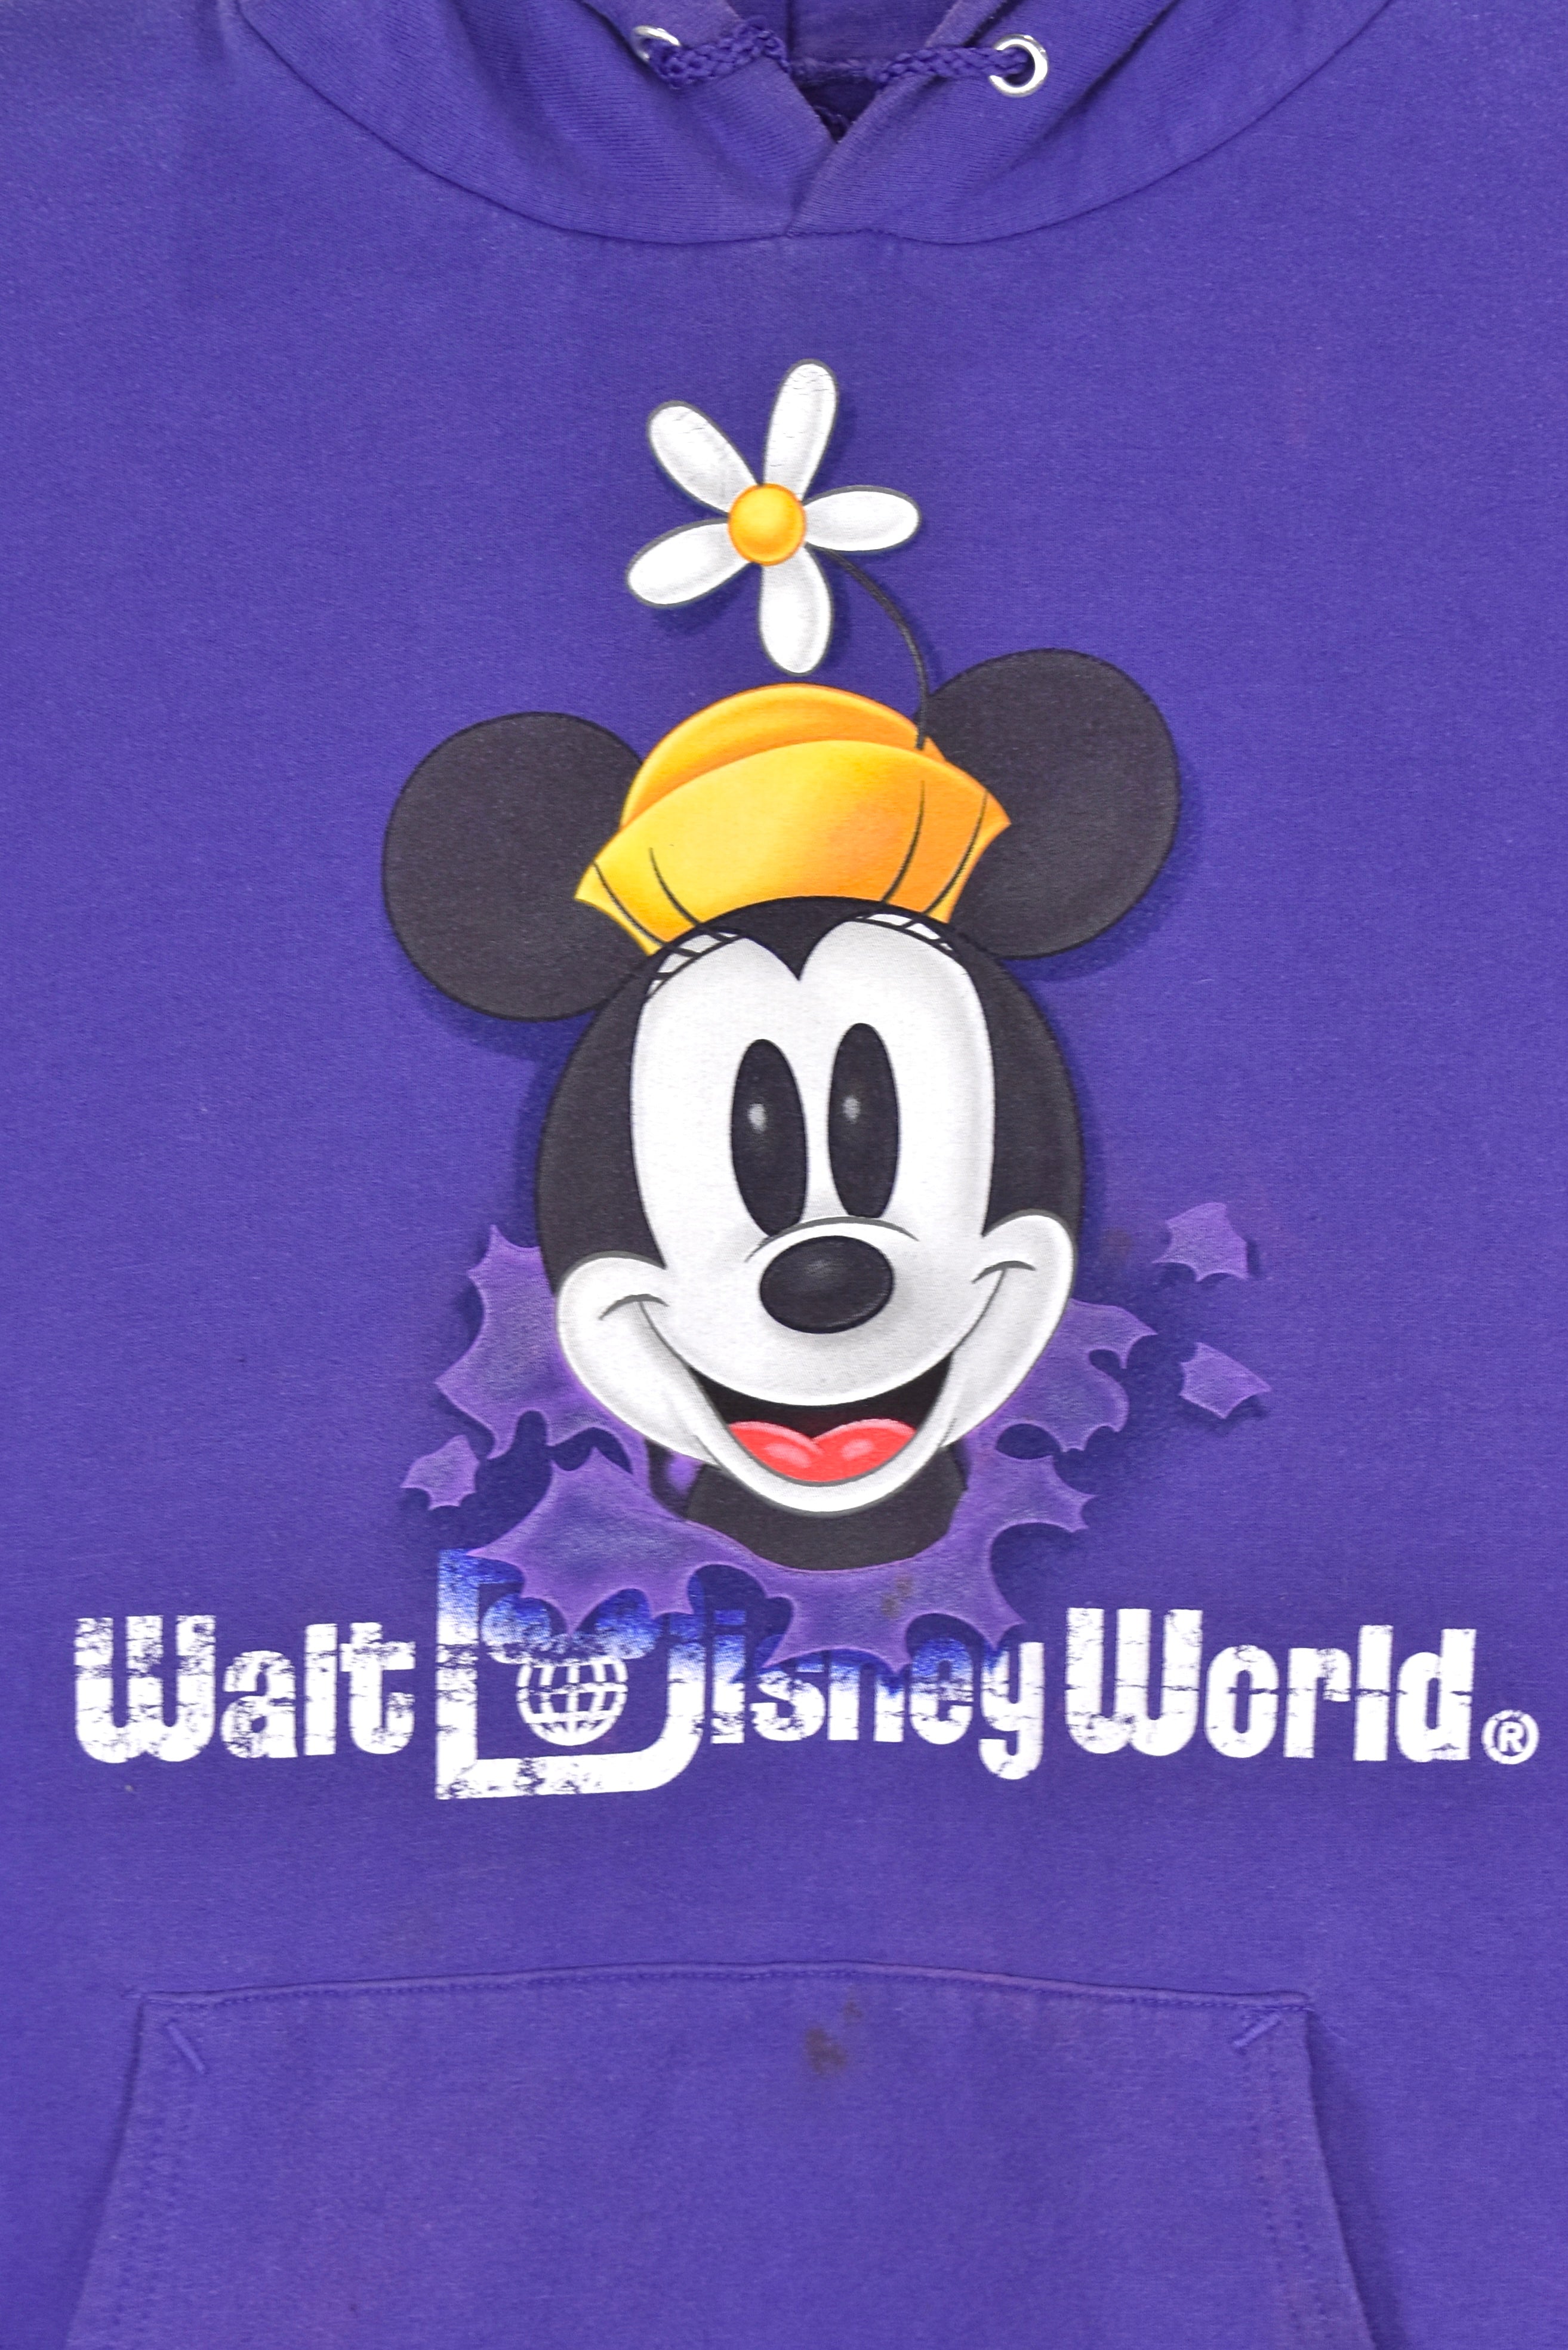 Vintage Minnie Mouse hoodie (XL), purple Disney graphic sweatshirt